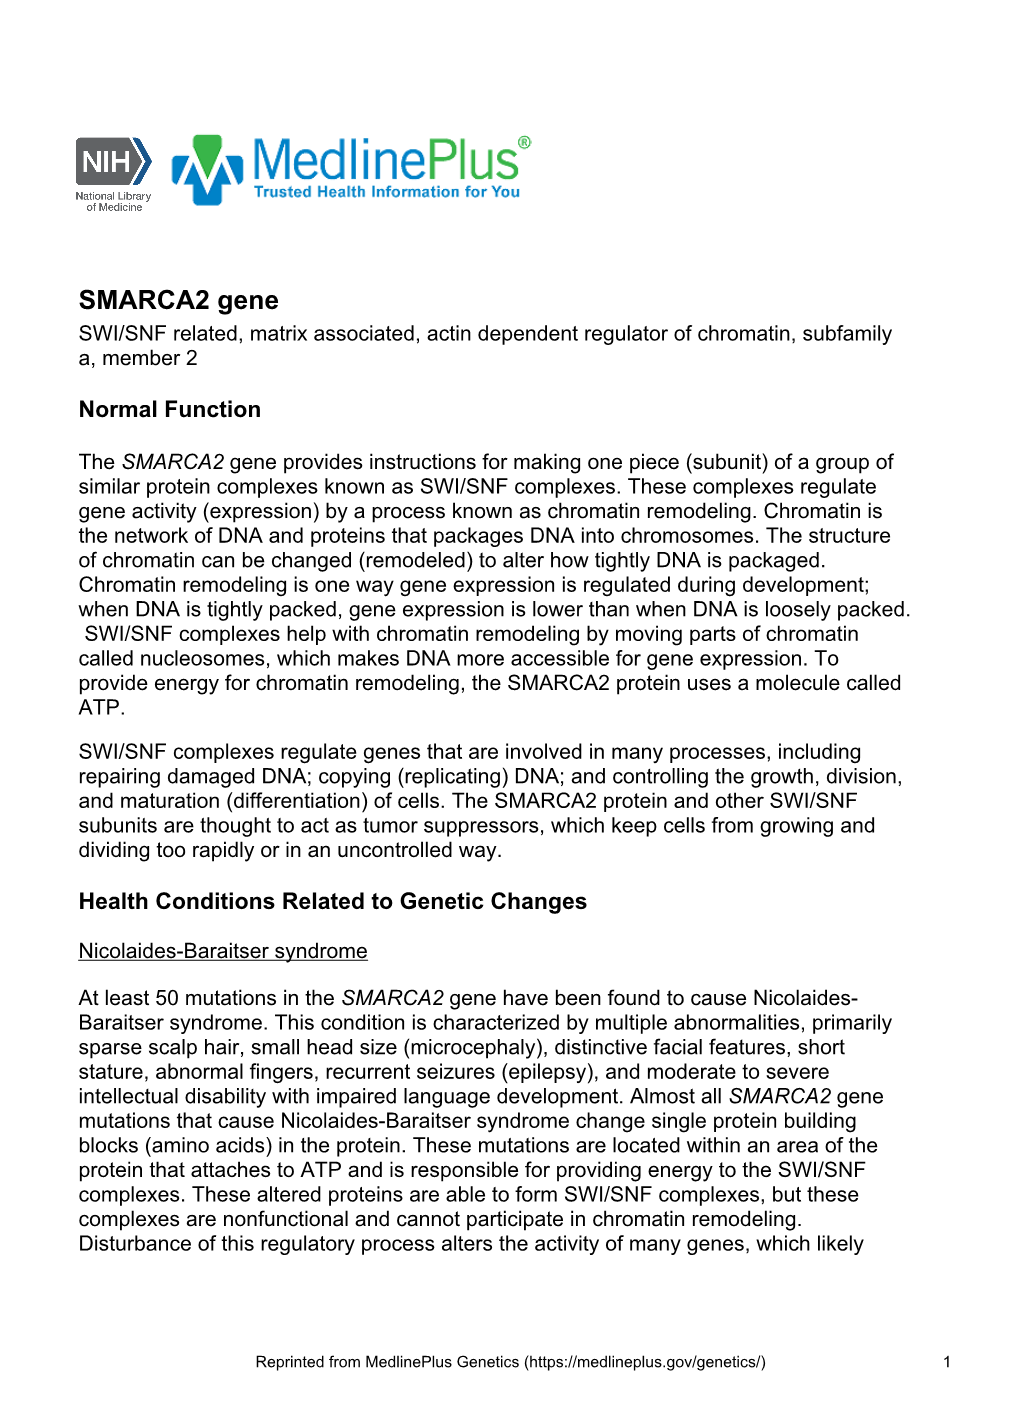 SMARCA2 Gene SWI/SNF Related, Matrix Associated, Actin Dependent Regulator of Chromatin, Subfamily A, Member 2